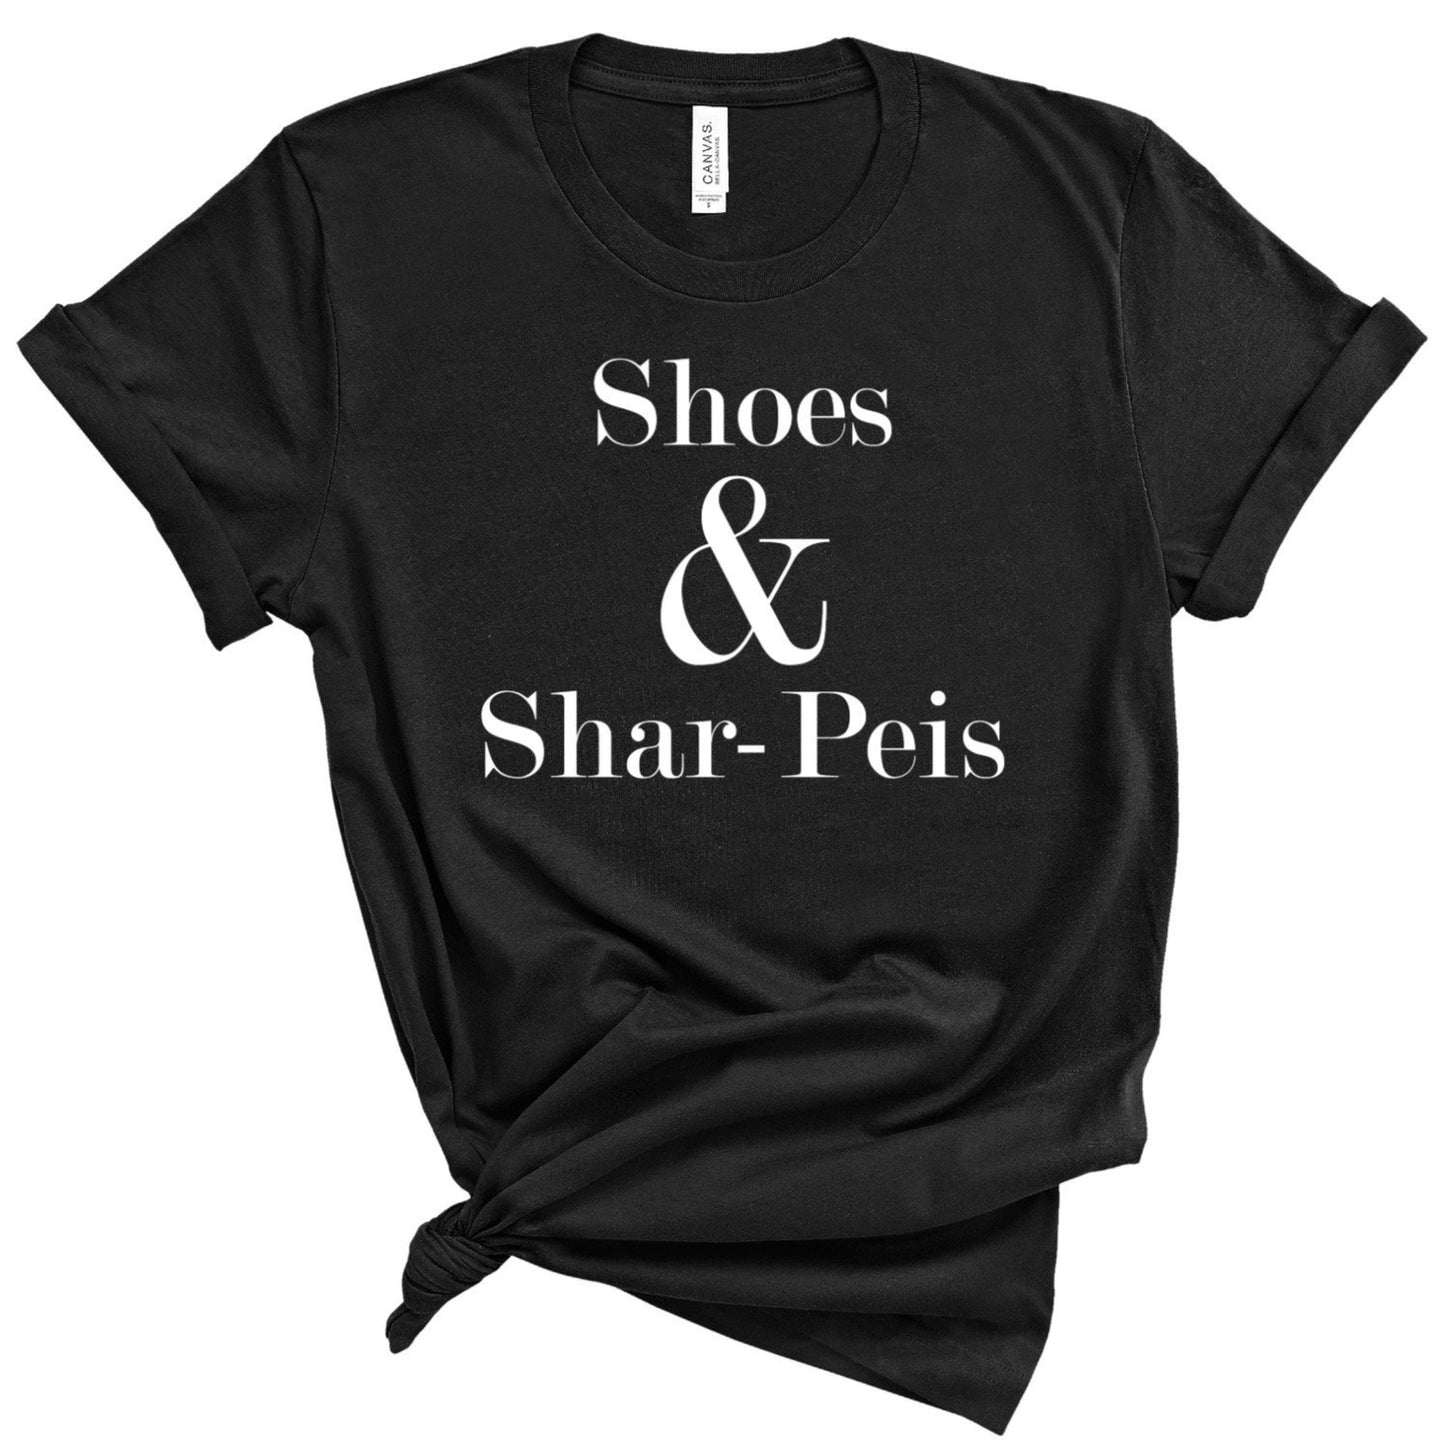 Shoes & Shar-Peis